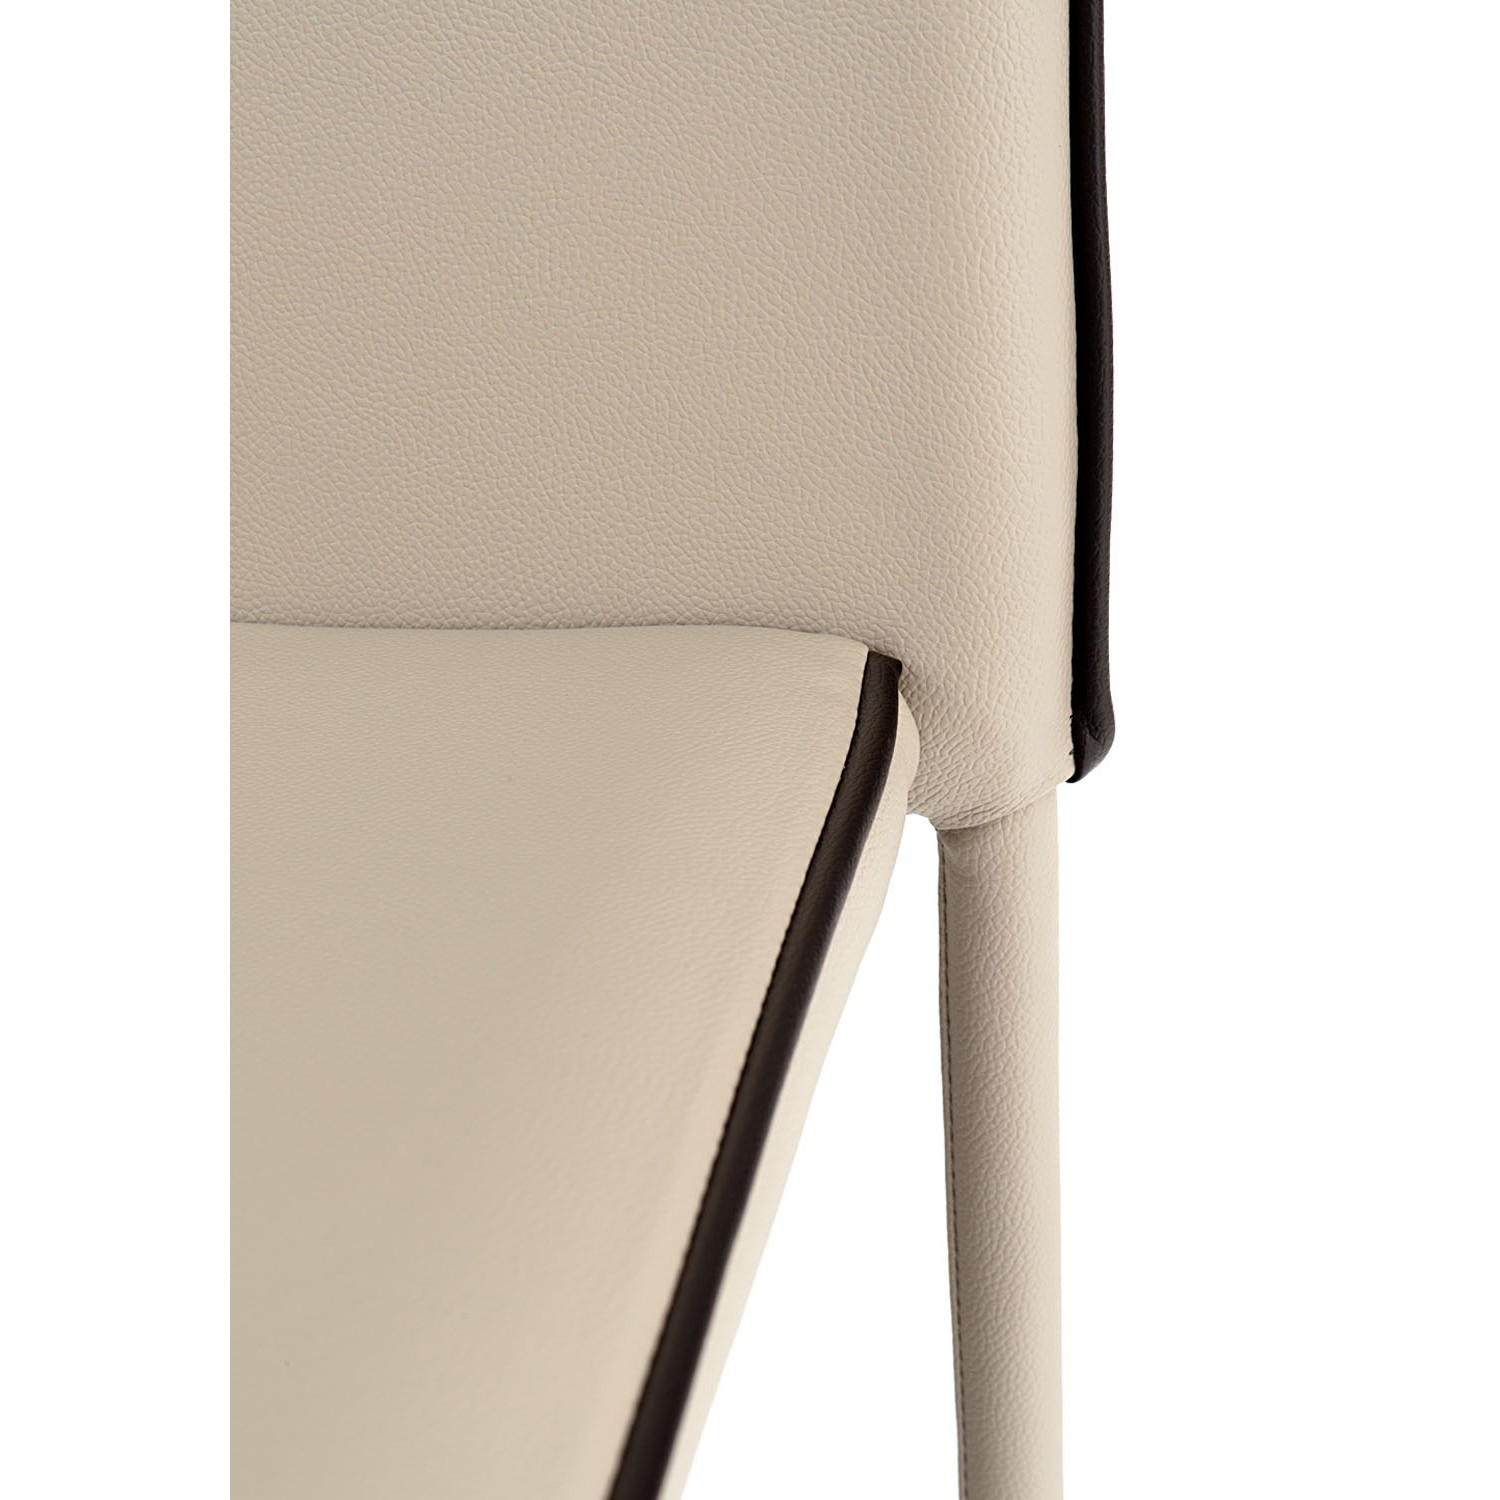 Tomasucci Set da 4 - sedia KABLE TORTORA - rivestita in pelle sintetica di colore Tortora